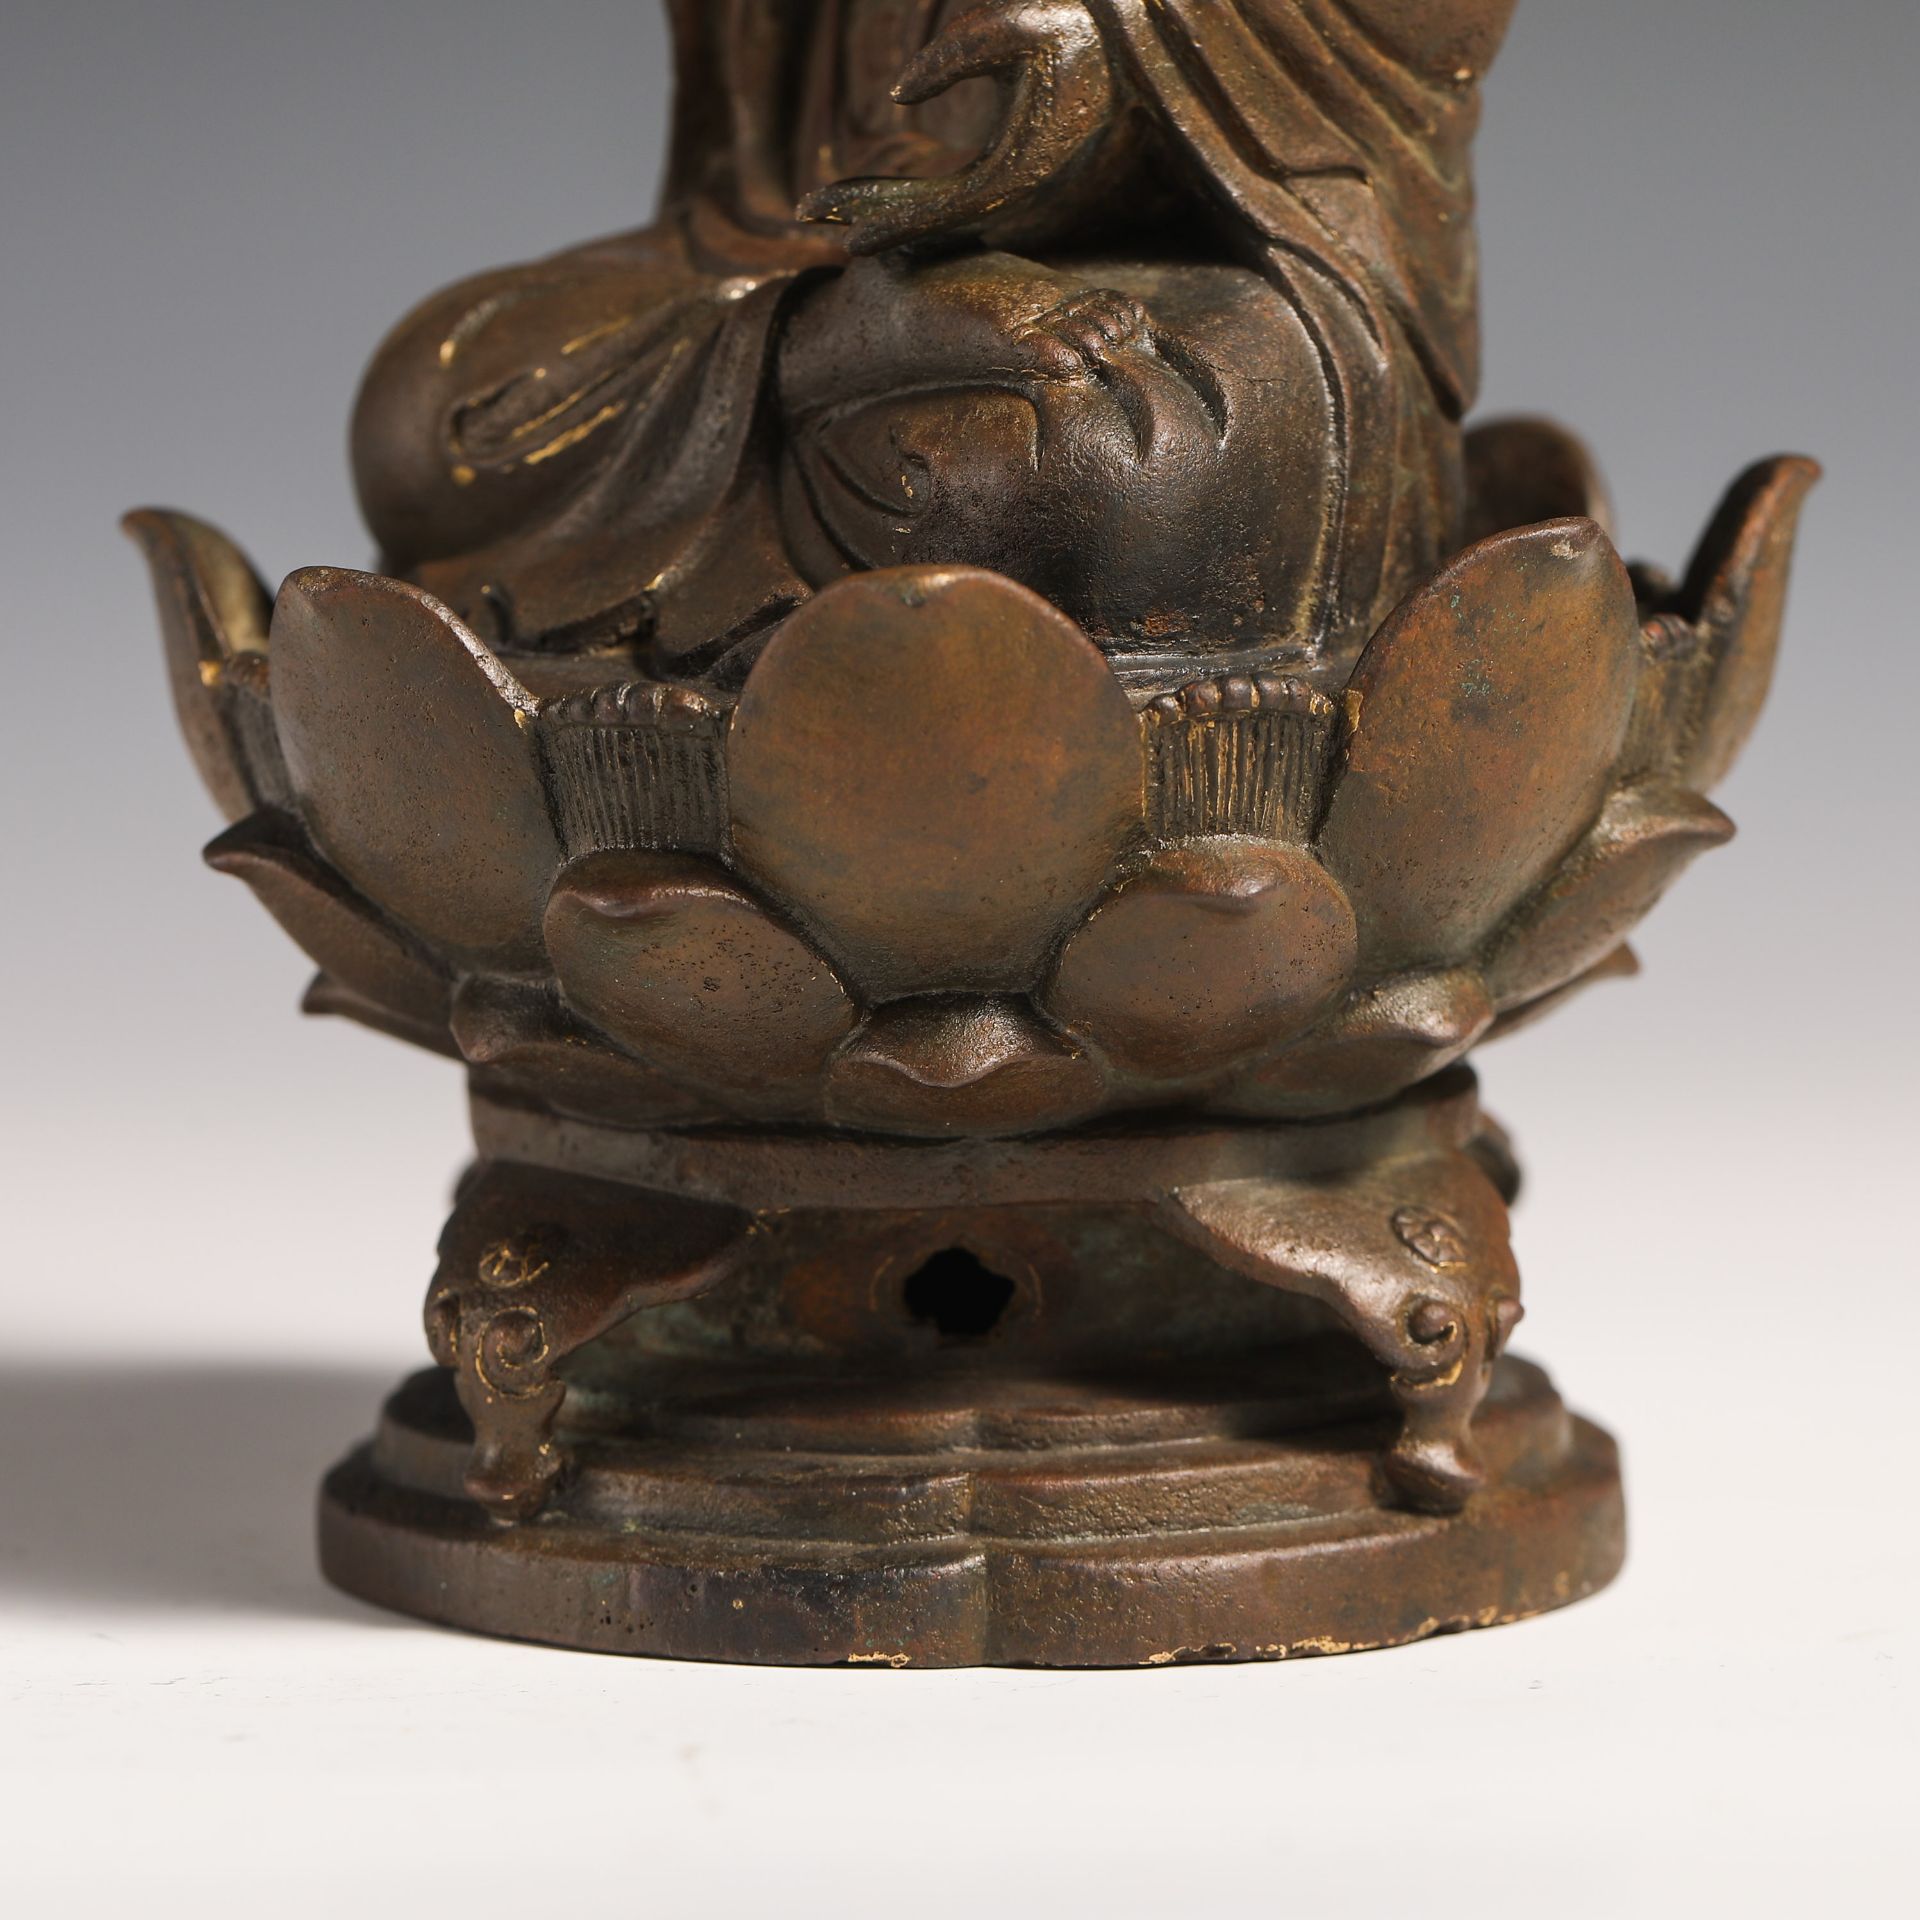 Liao Dynasty Buddha statue - Image 8 of 17